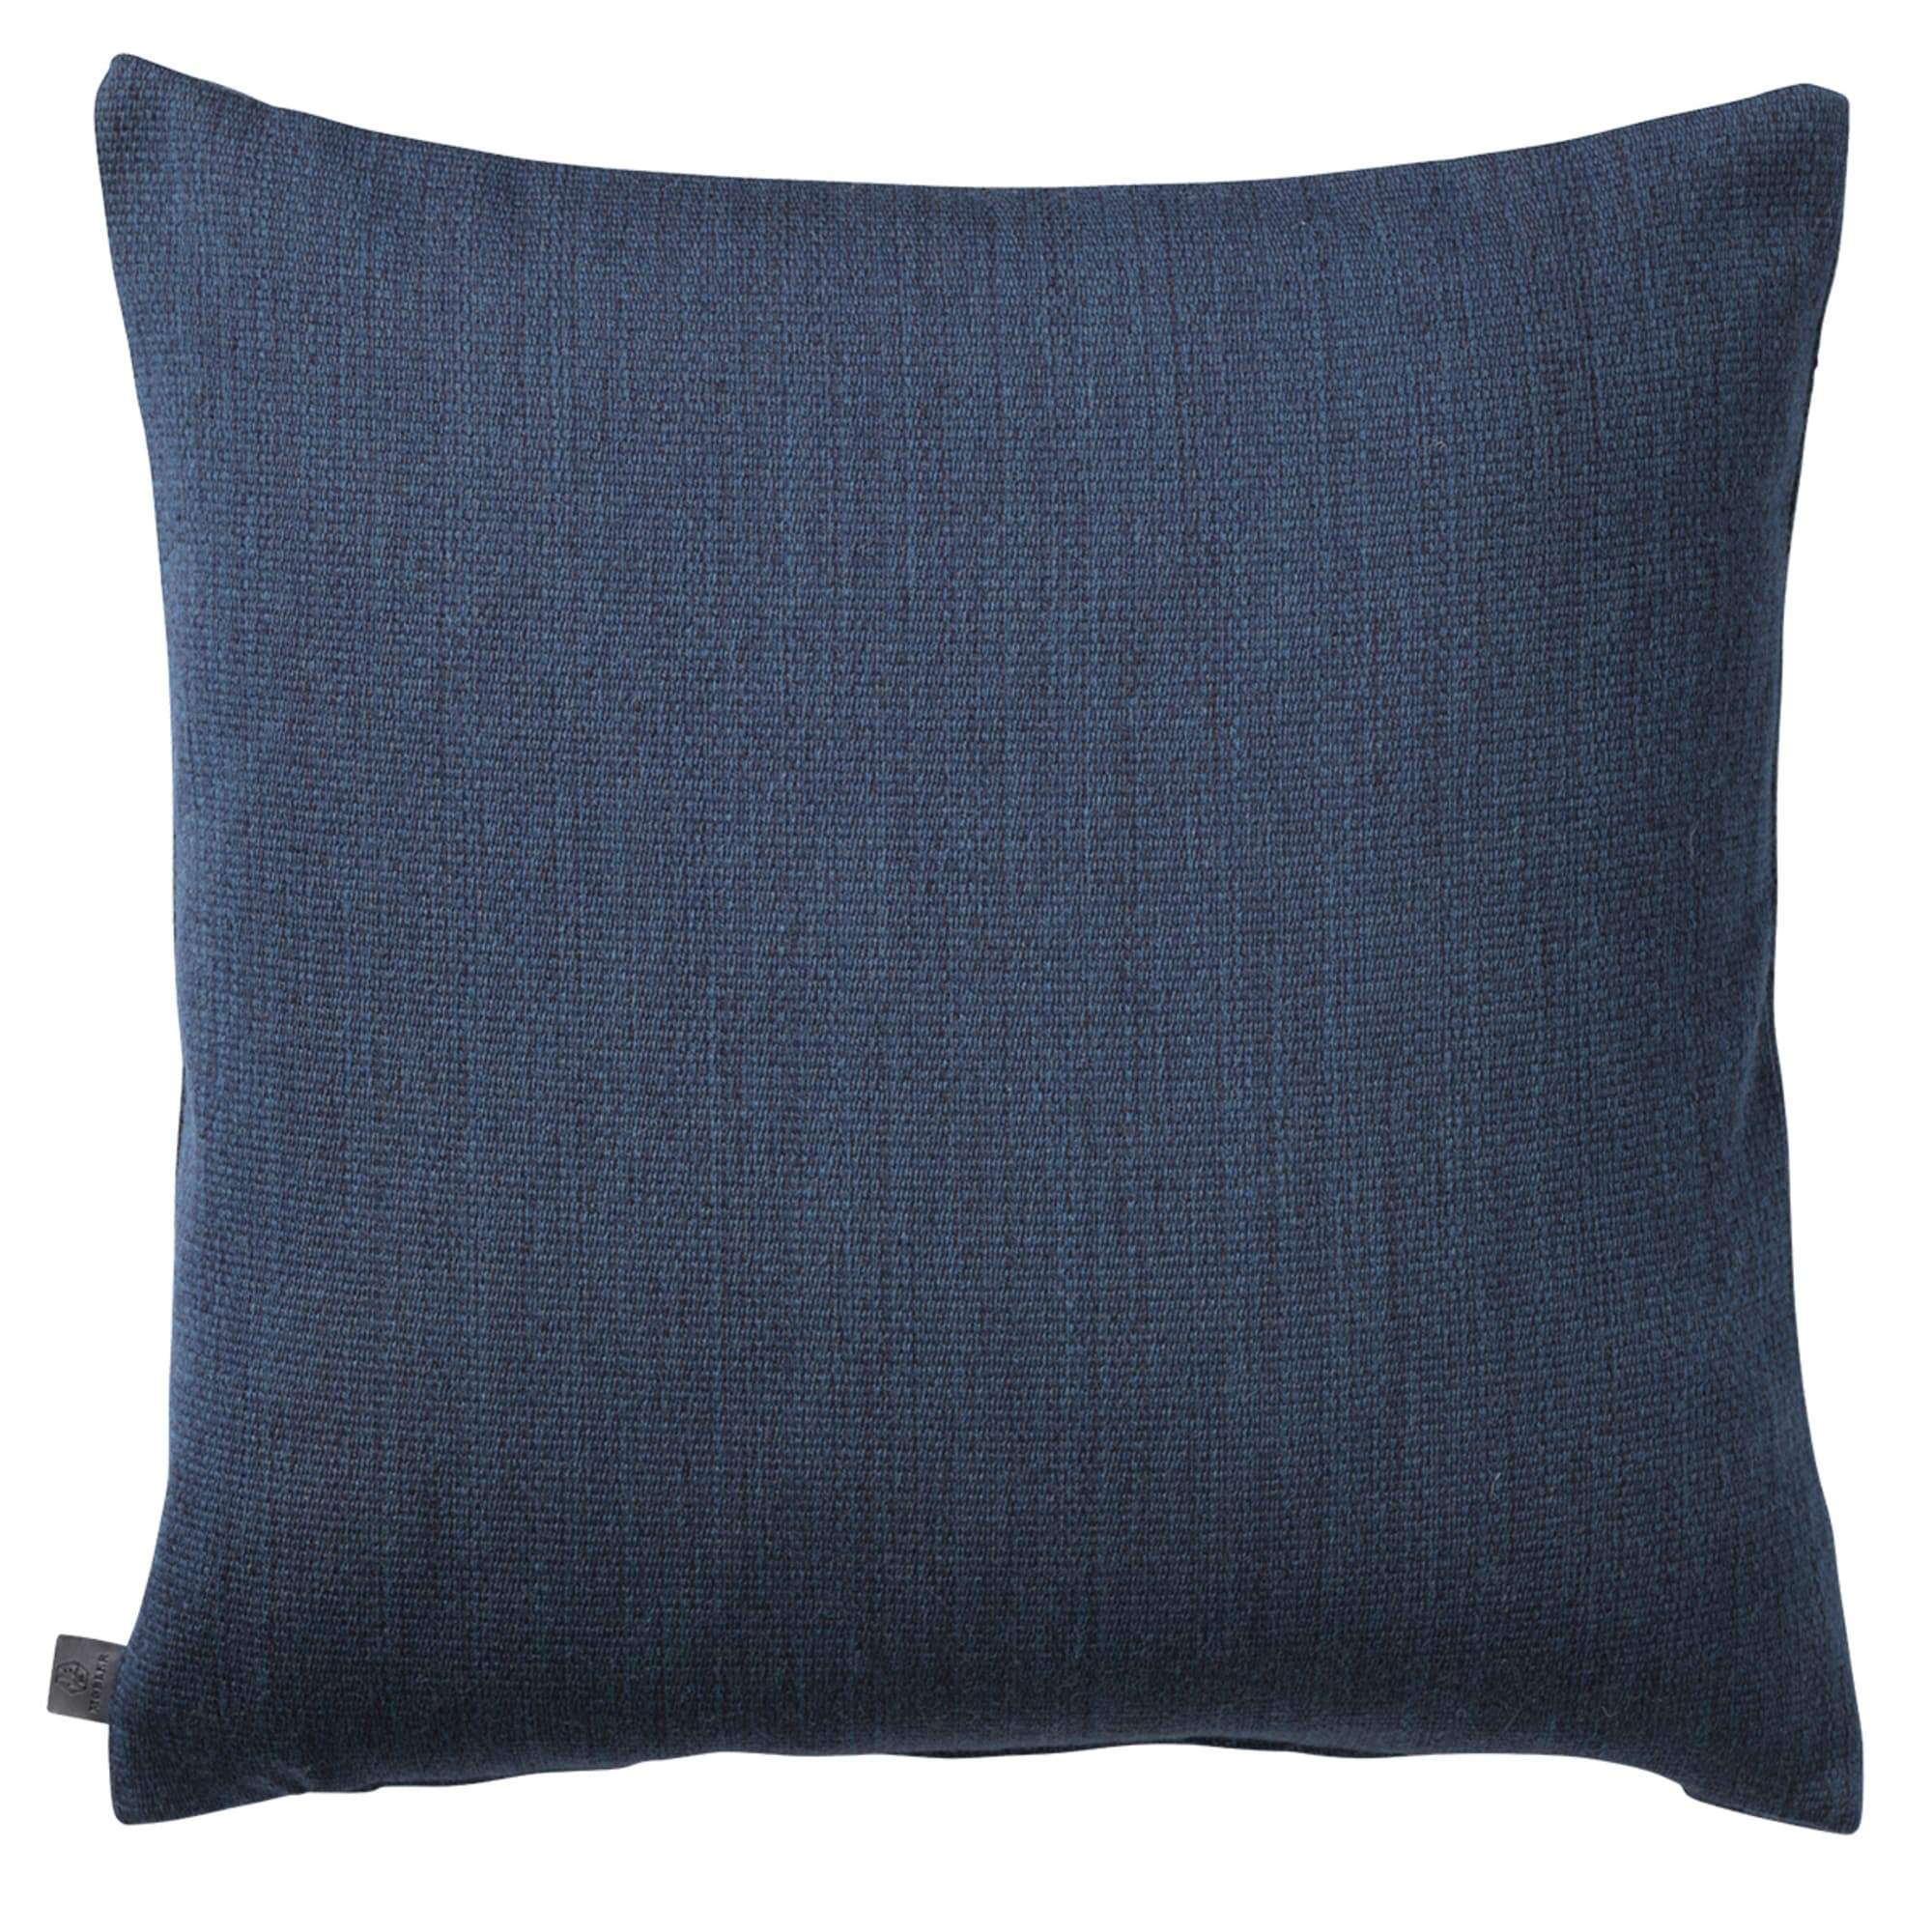 Fdb Møbler R17 Råbjerg Cushion Blue, 50x50cm